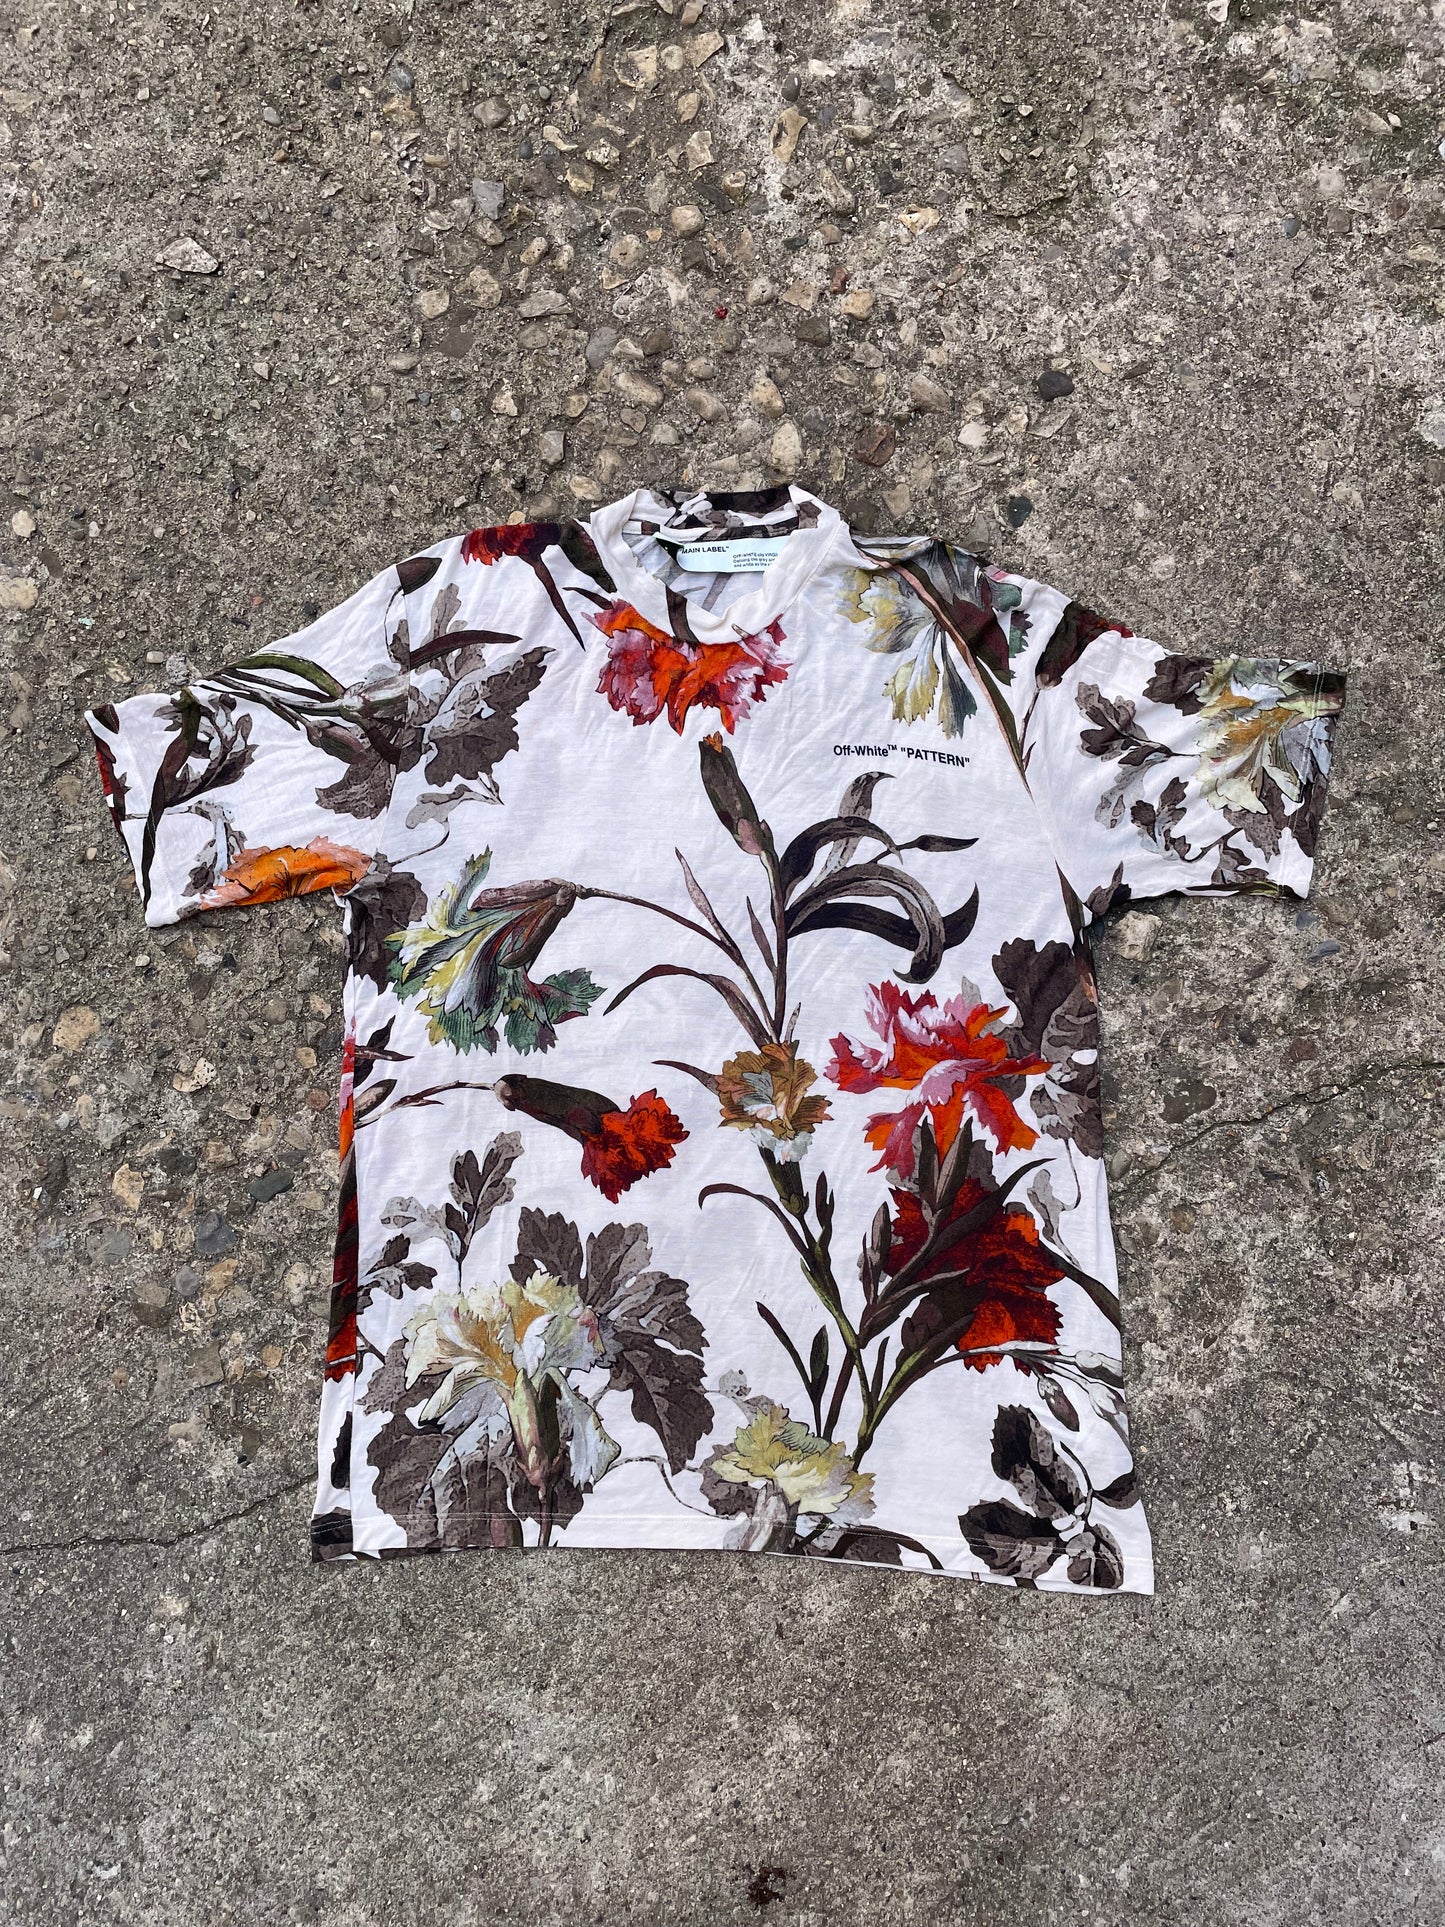 Off-White "Pattern" Floral Print T-Shirt - 42